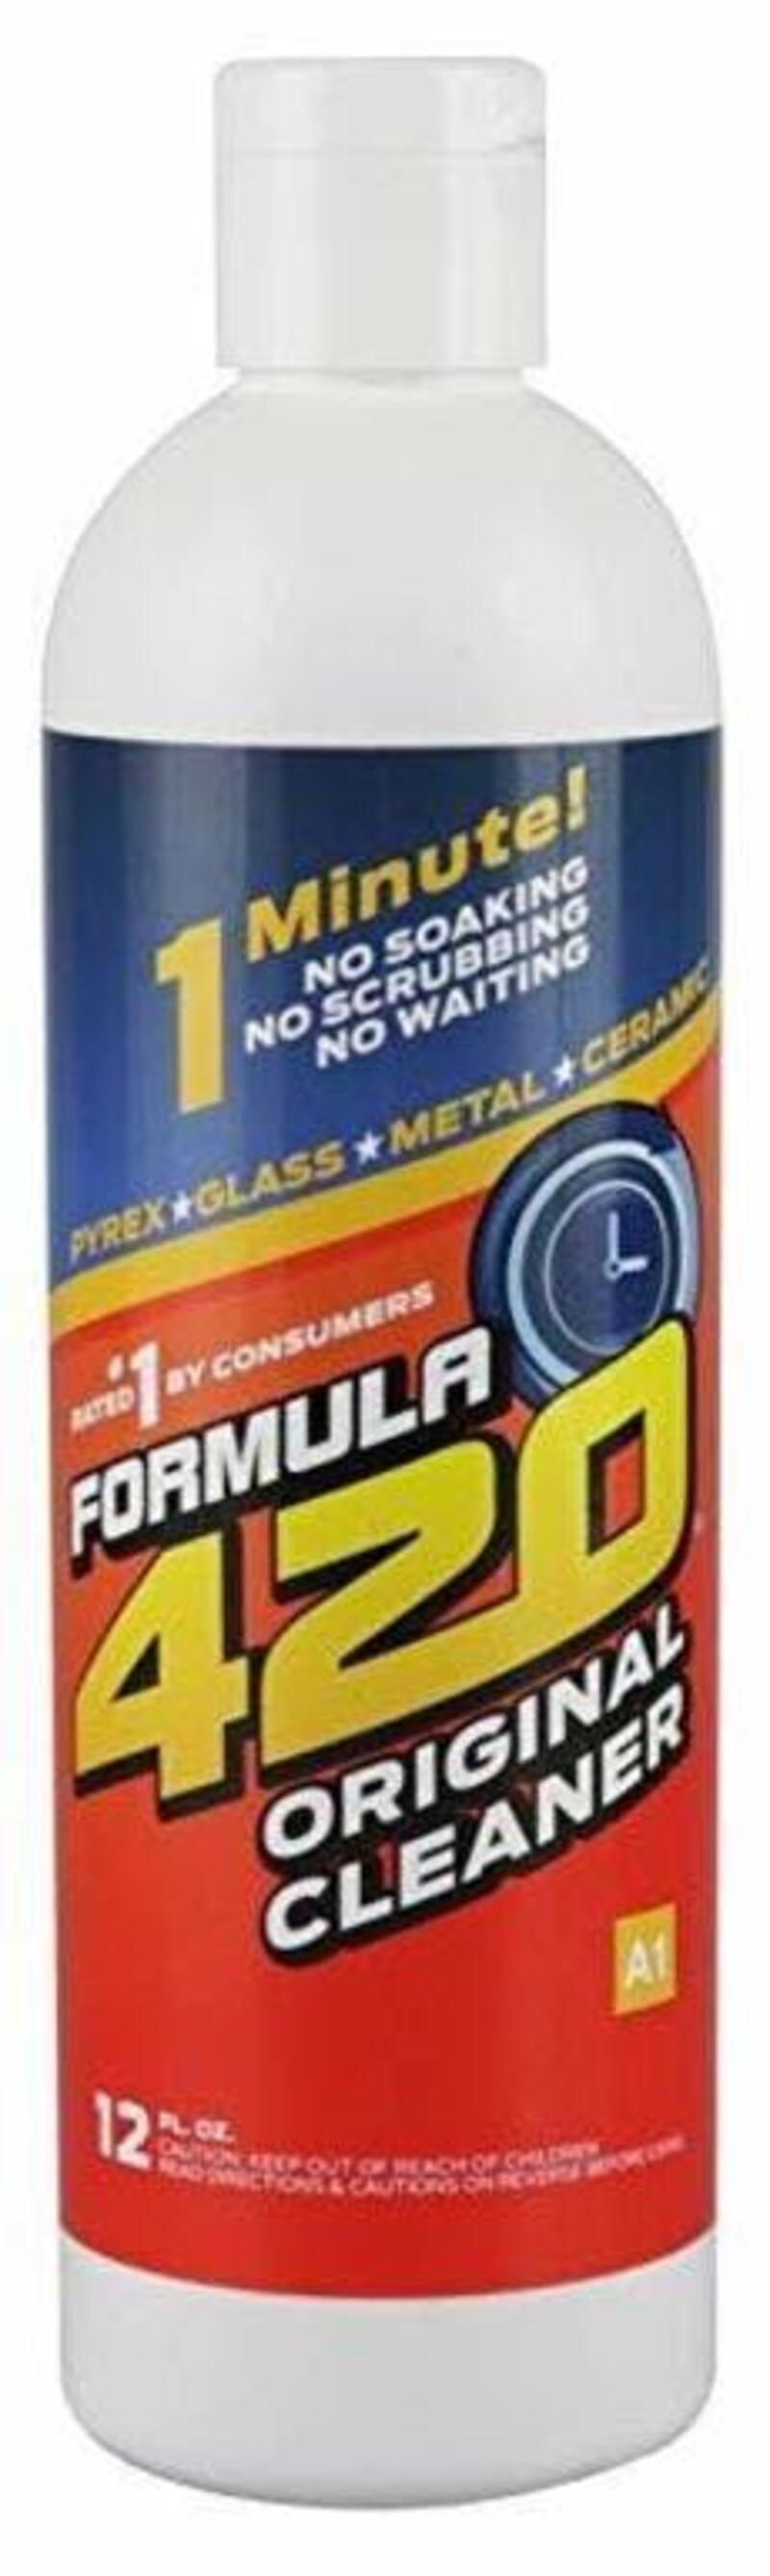 Formula 420 Cleaner + 2 Clipper Lighters for $10